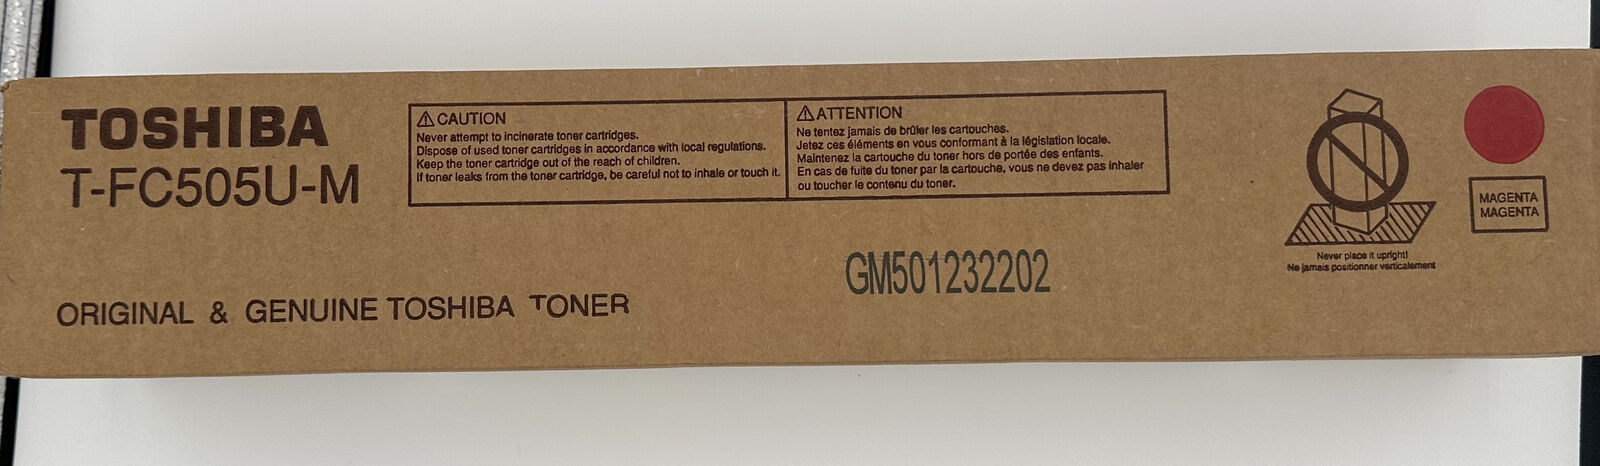 TOSHIBA T-FC505U-M Print  MAGENTA Toner Cartridge / FACTORY SEALED BOX